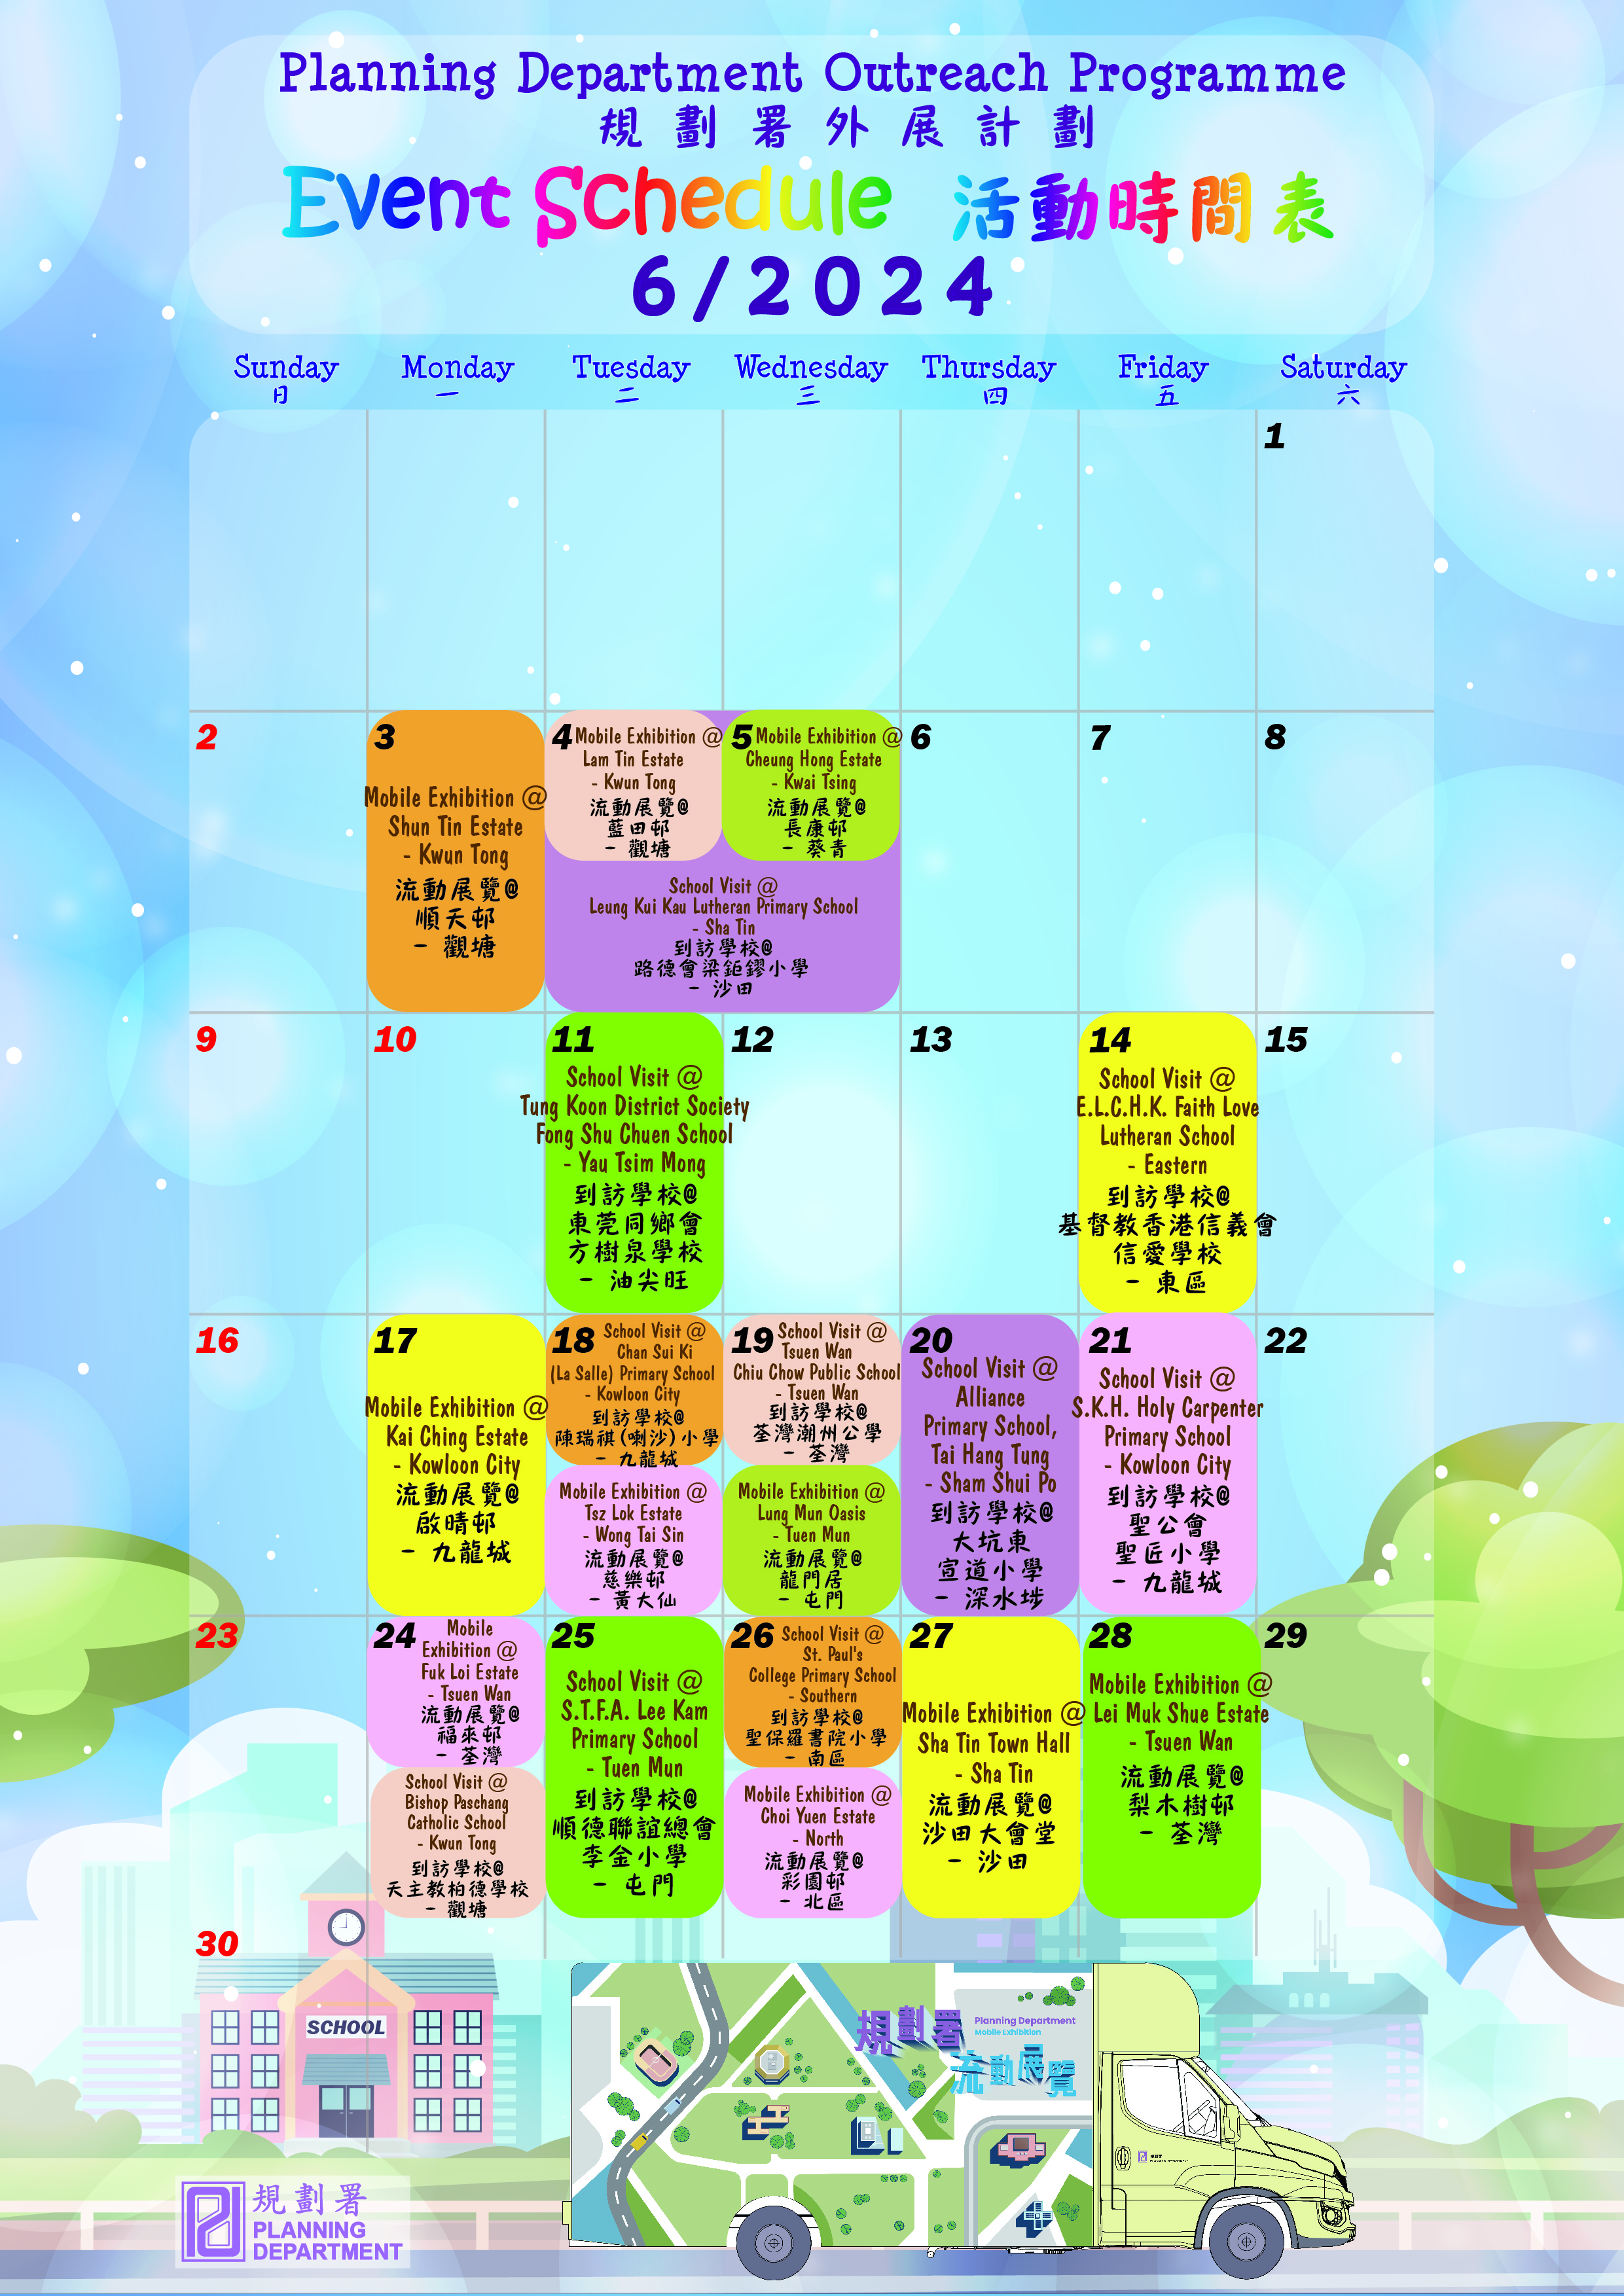 Outreach Programme Schedule